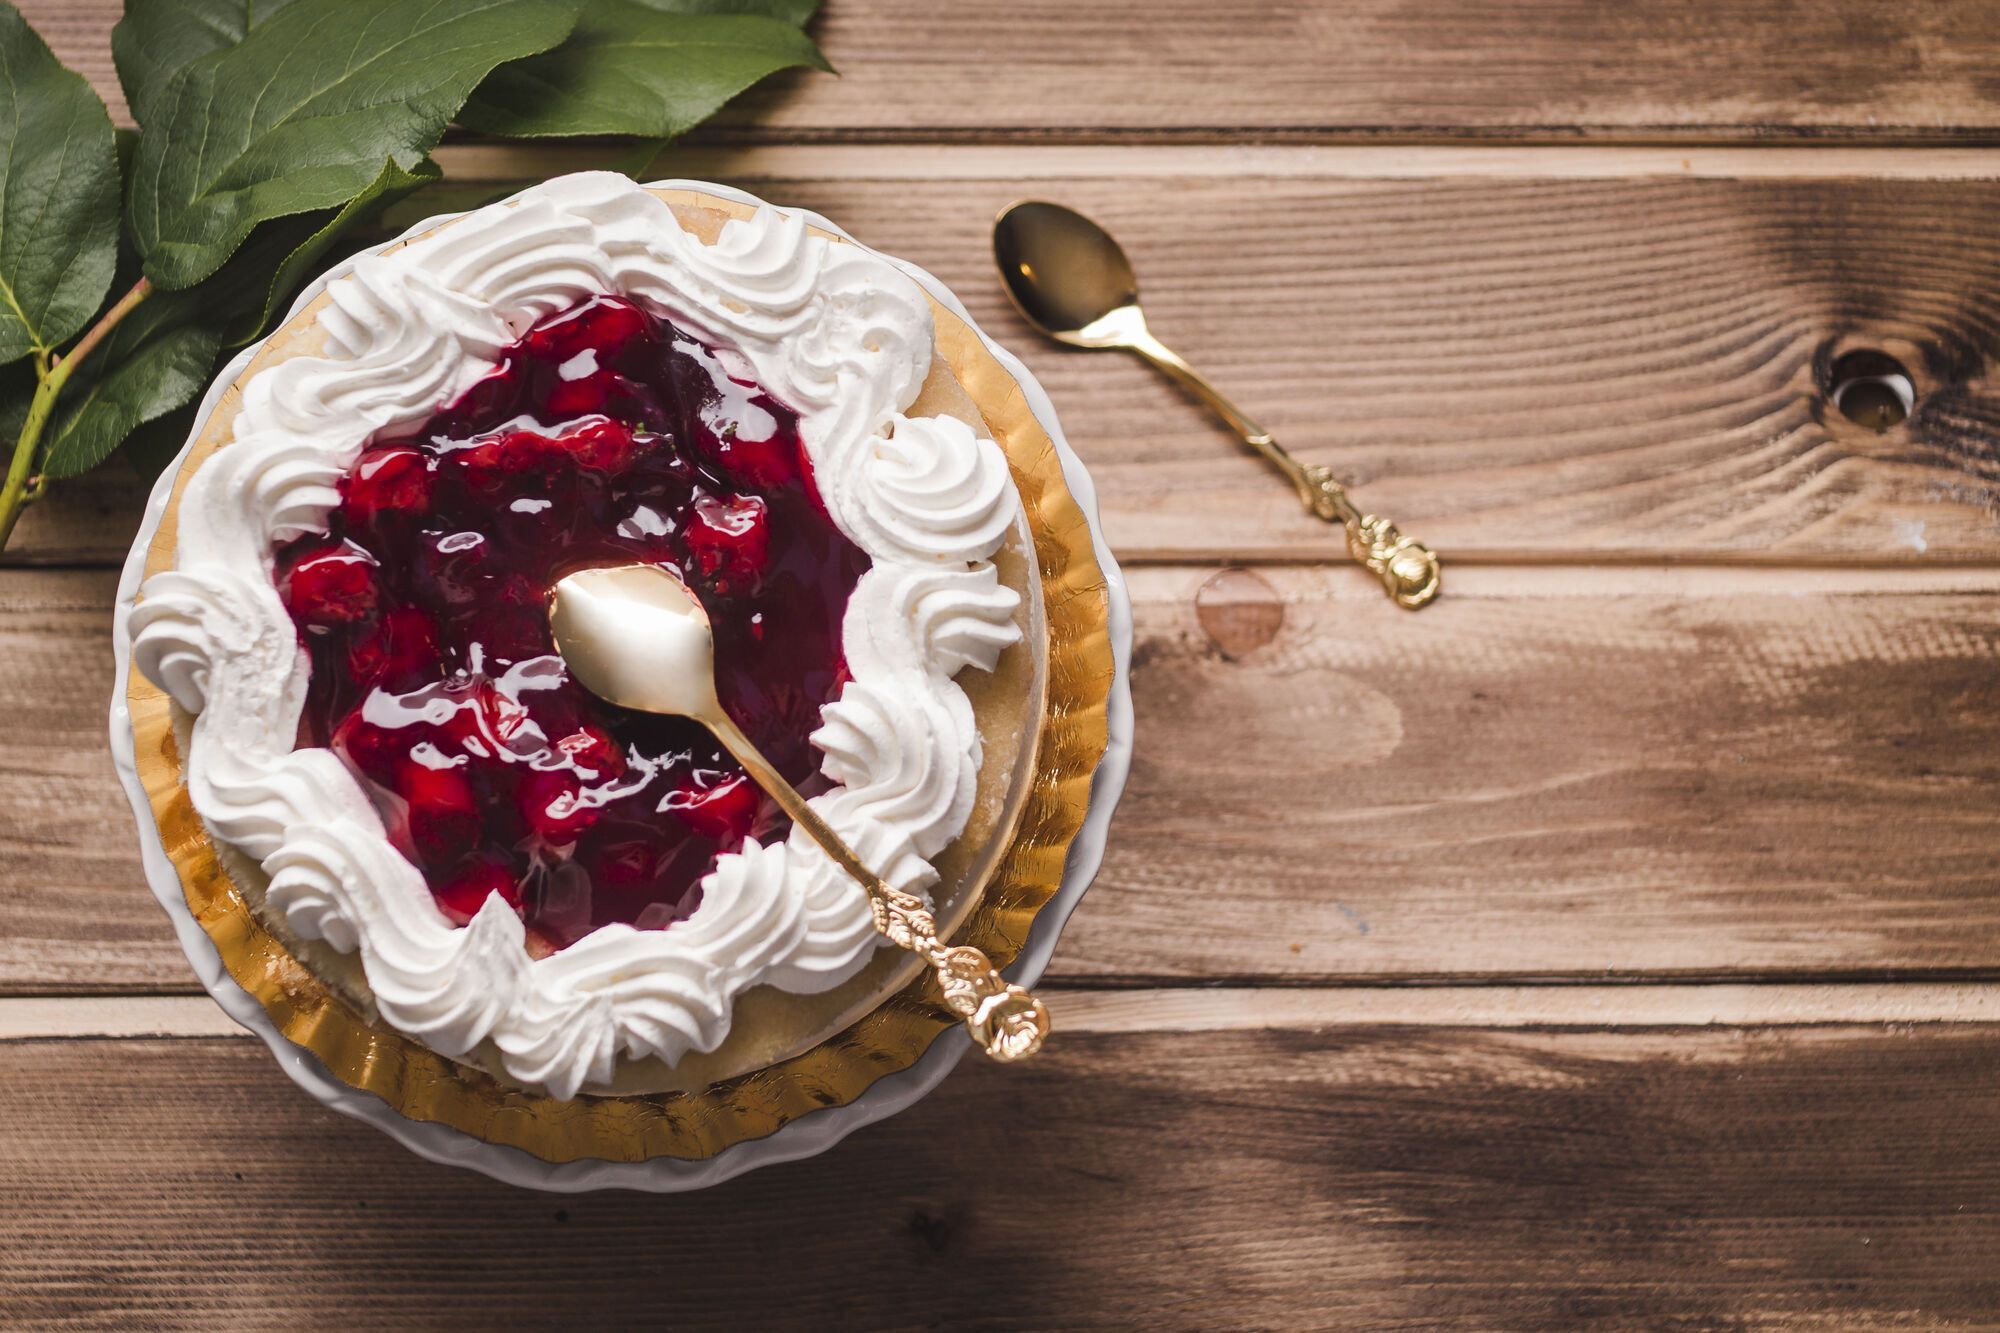 Yogurt cake with raspberries: preparing a real summer delight